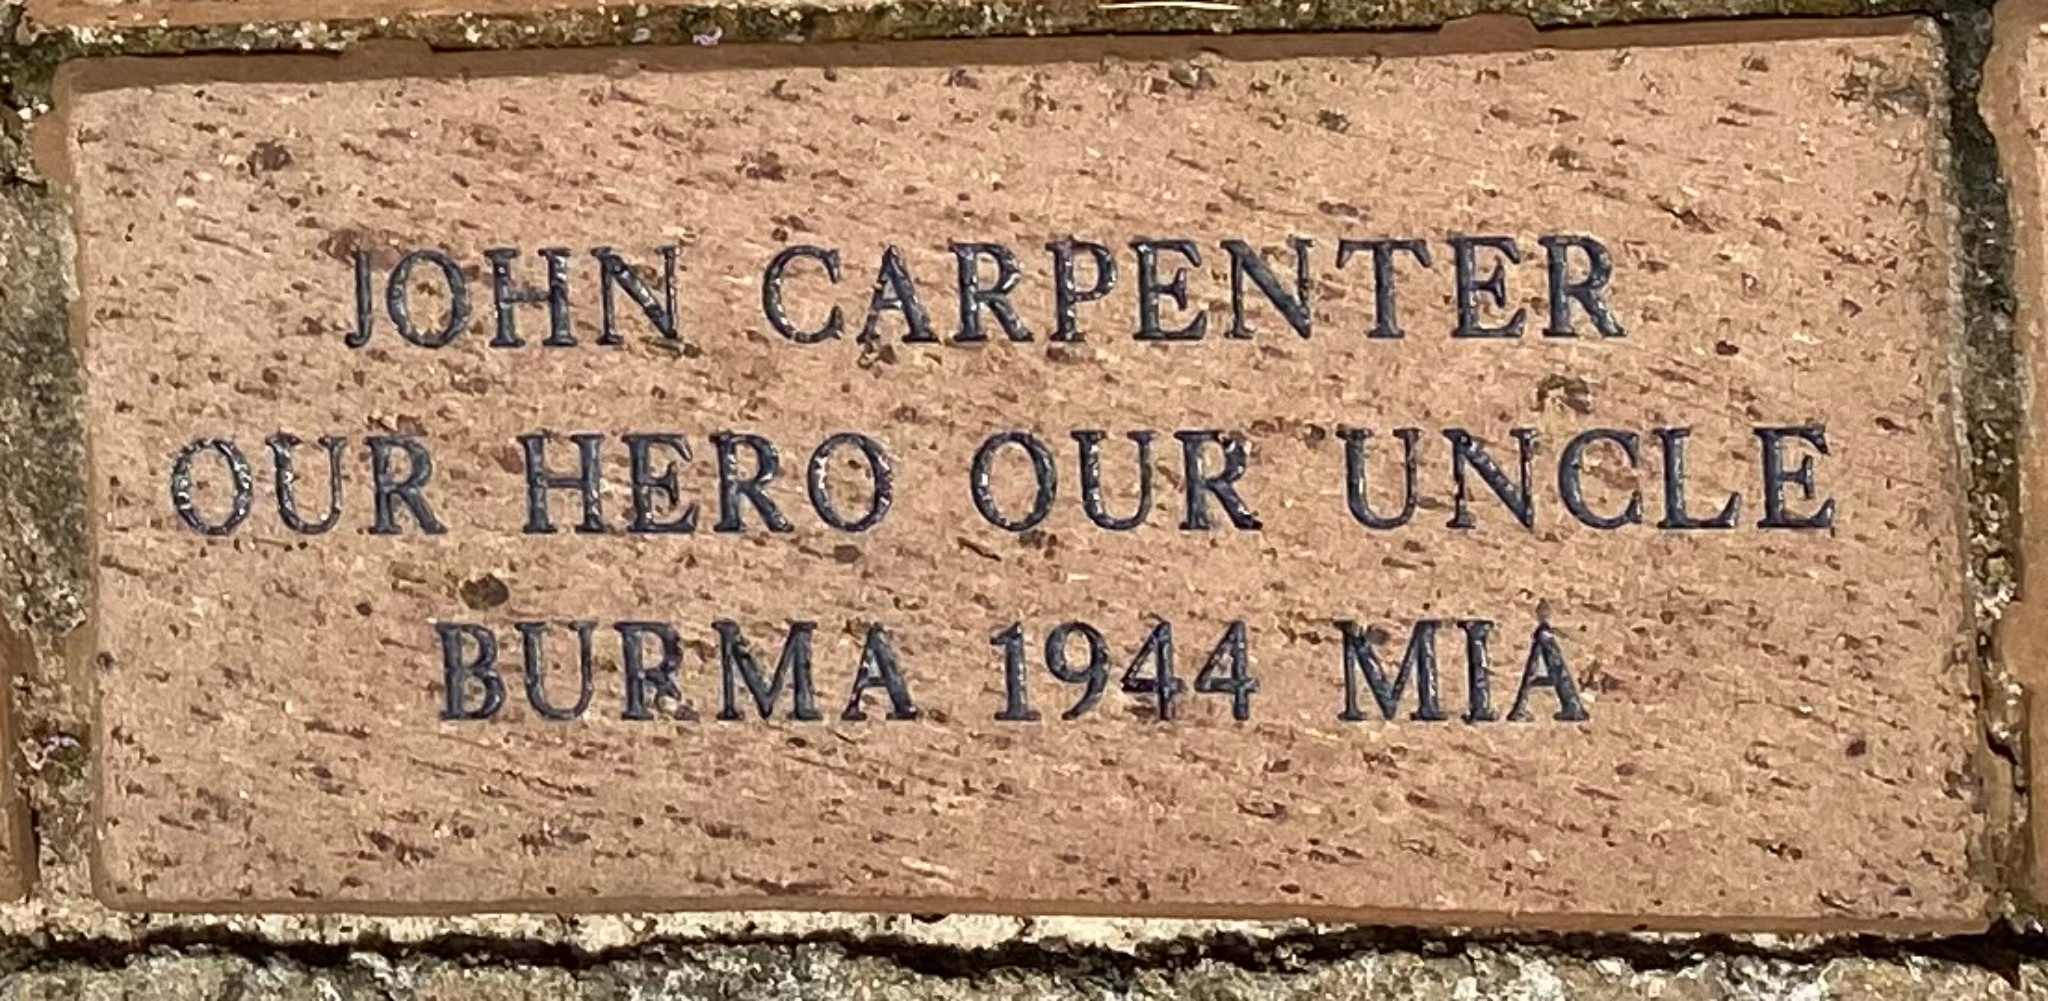 JOHN CARPENTER OUR HERO OUR UNCLE BURMA 1944 MIA